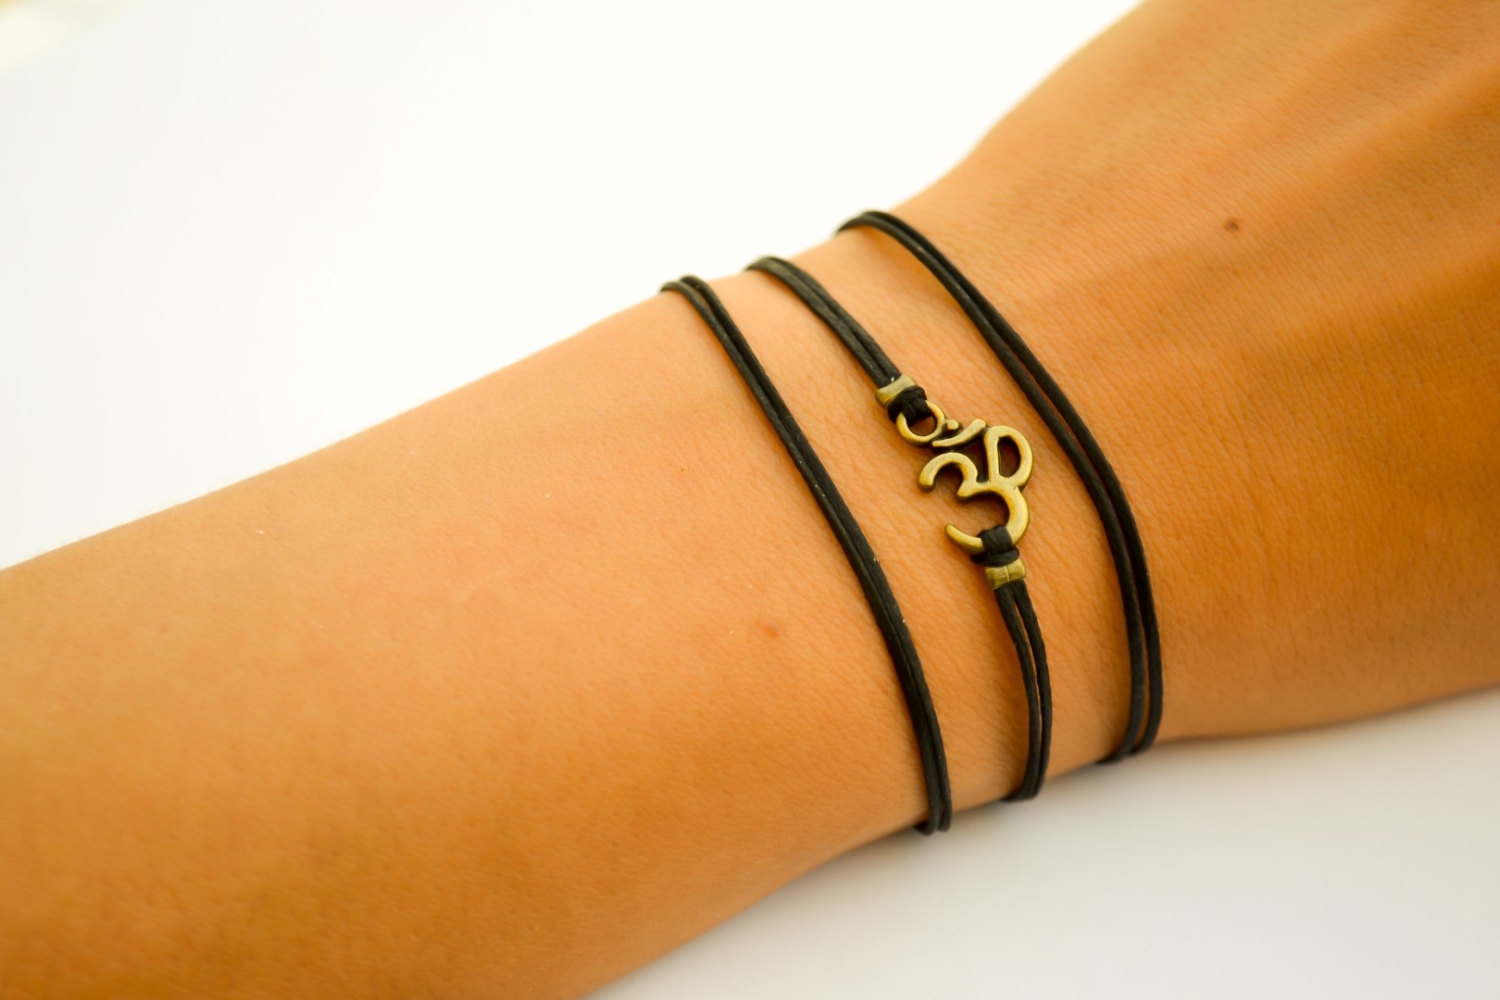 OM bracelet, wrapped bracelet with bronze tone Om charm, Hindu symbol, black, gi - $13.00